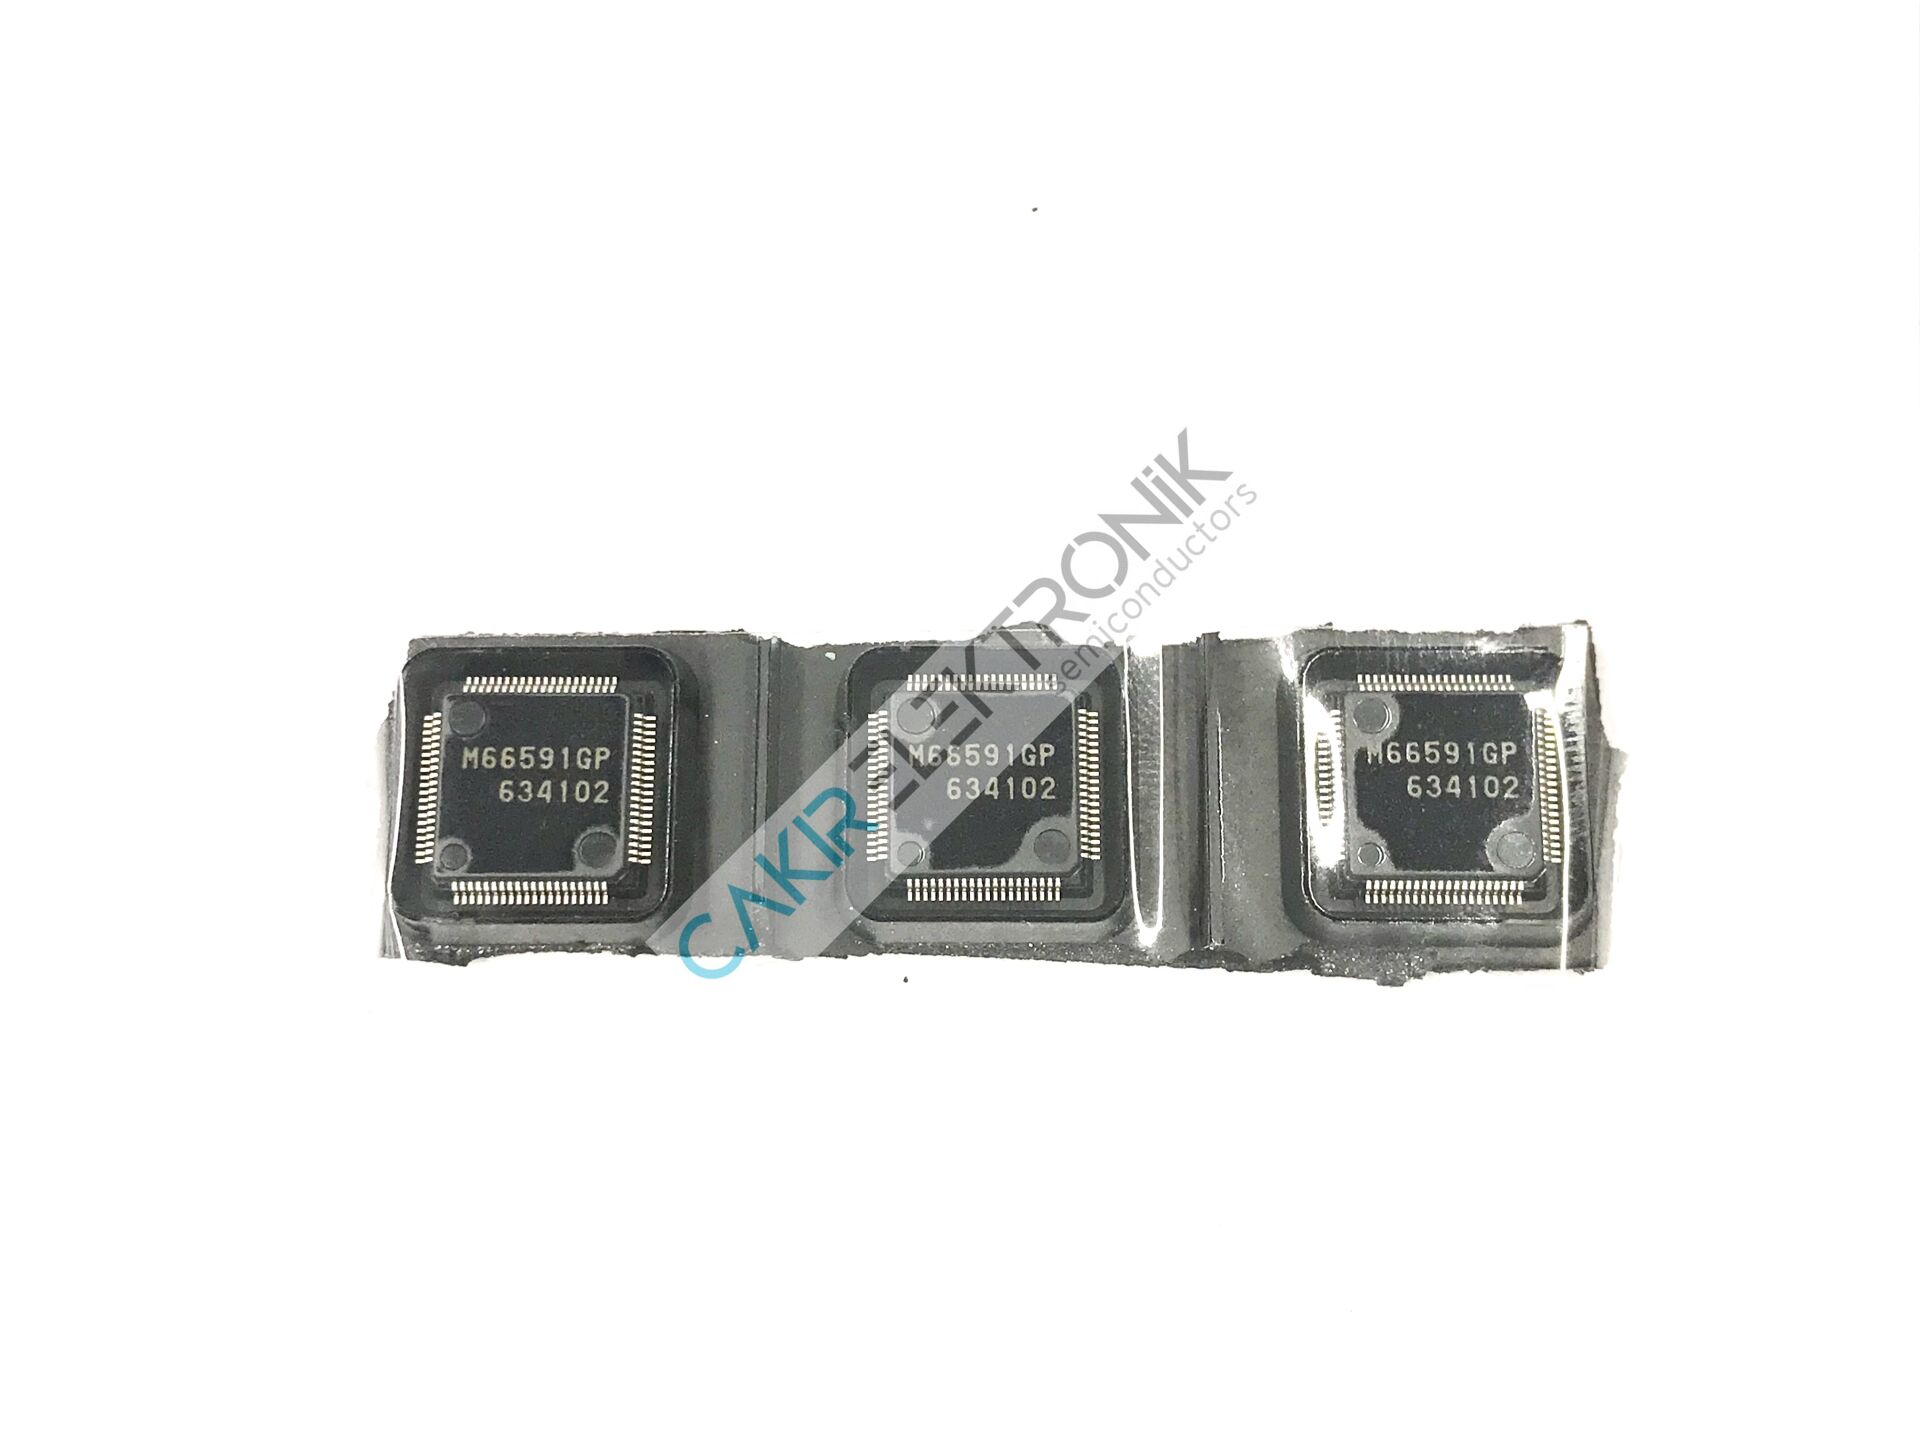 M66591GP - M66591 - USB 2.0 Peripheral Controller